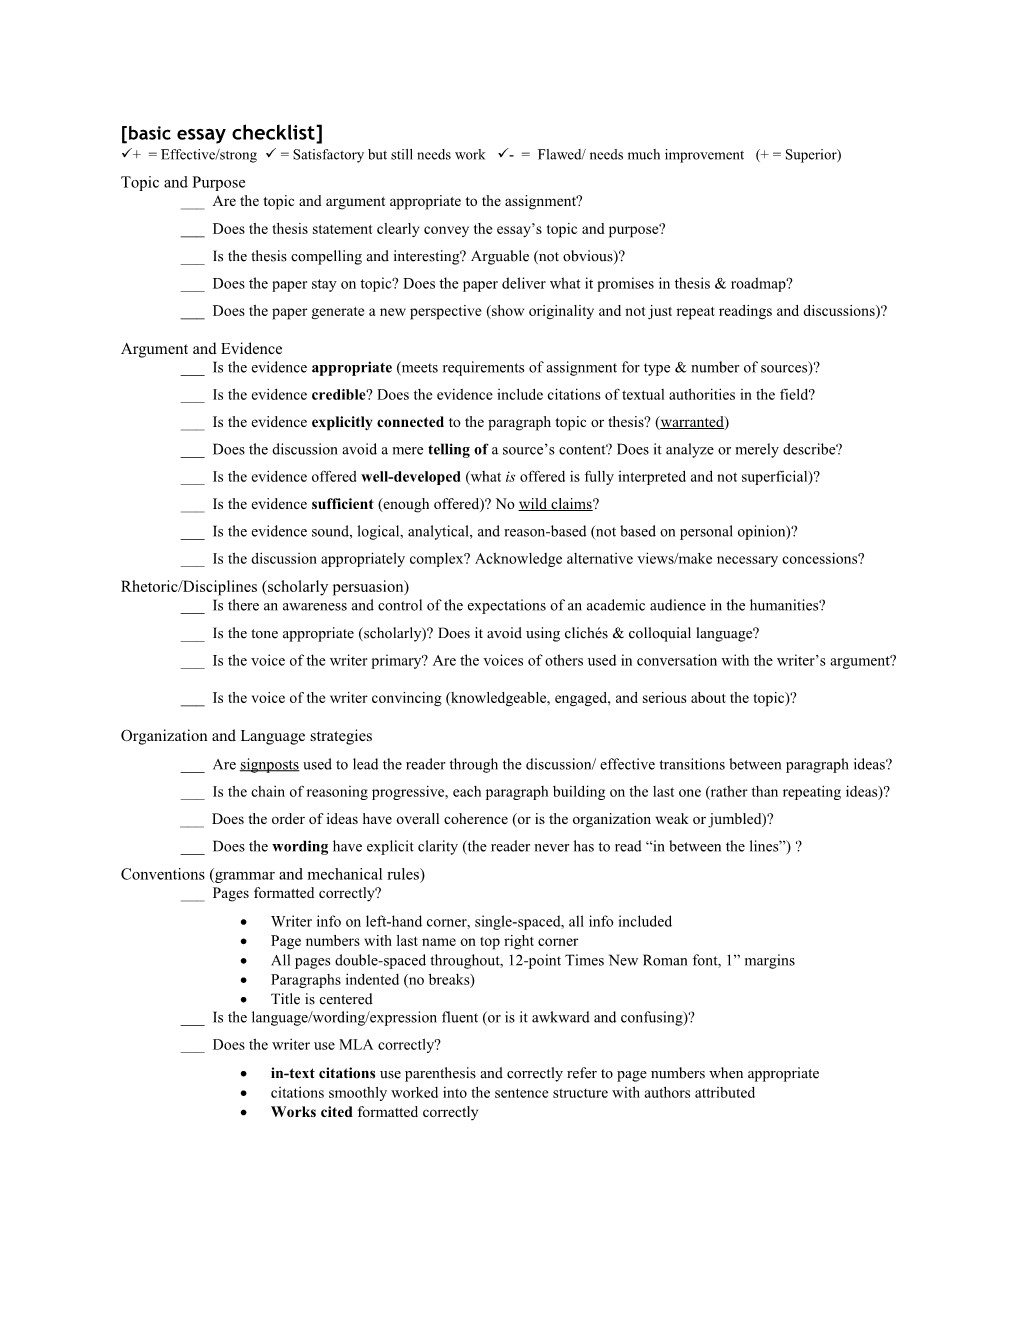 Basic Essay Checklist